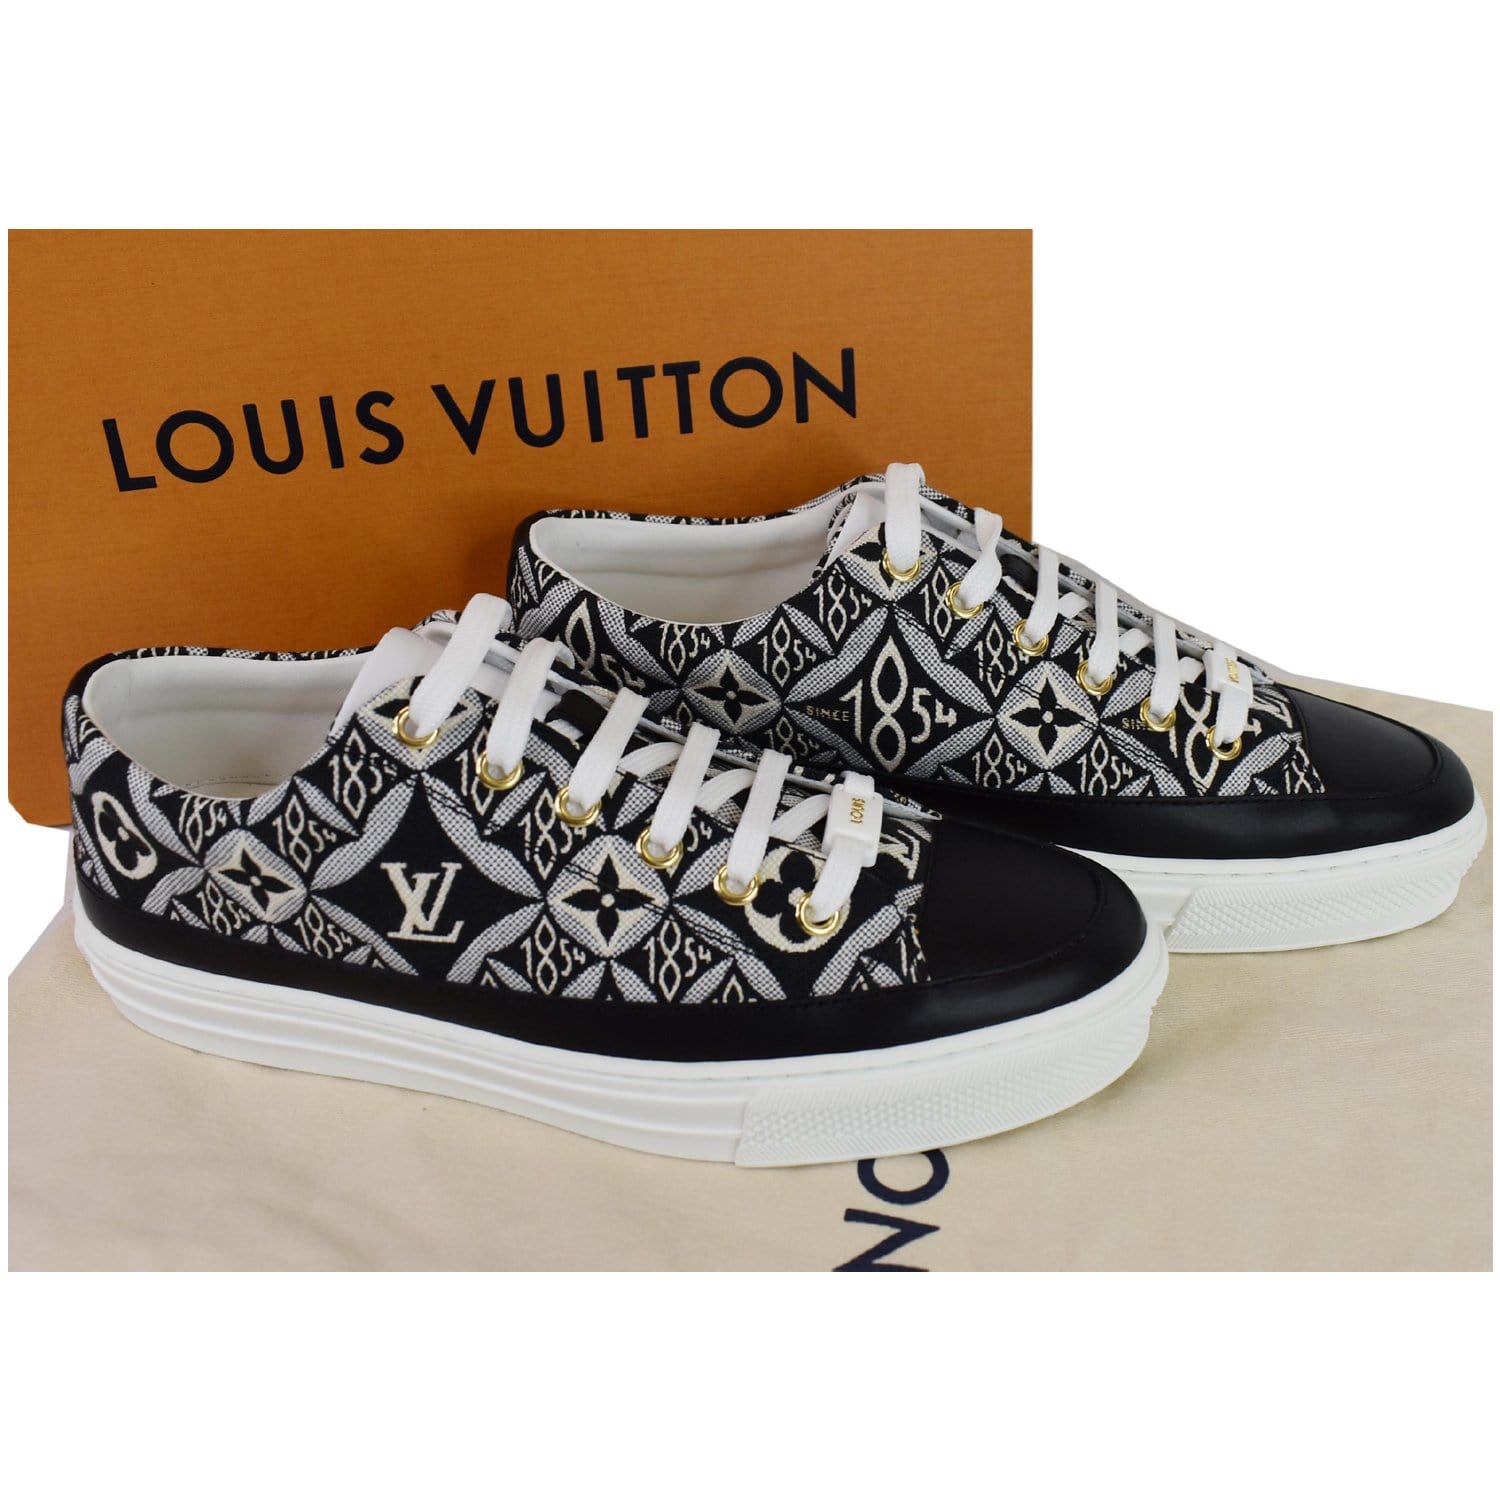 Louis Vuitton Monogram Low Top Sneakers